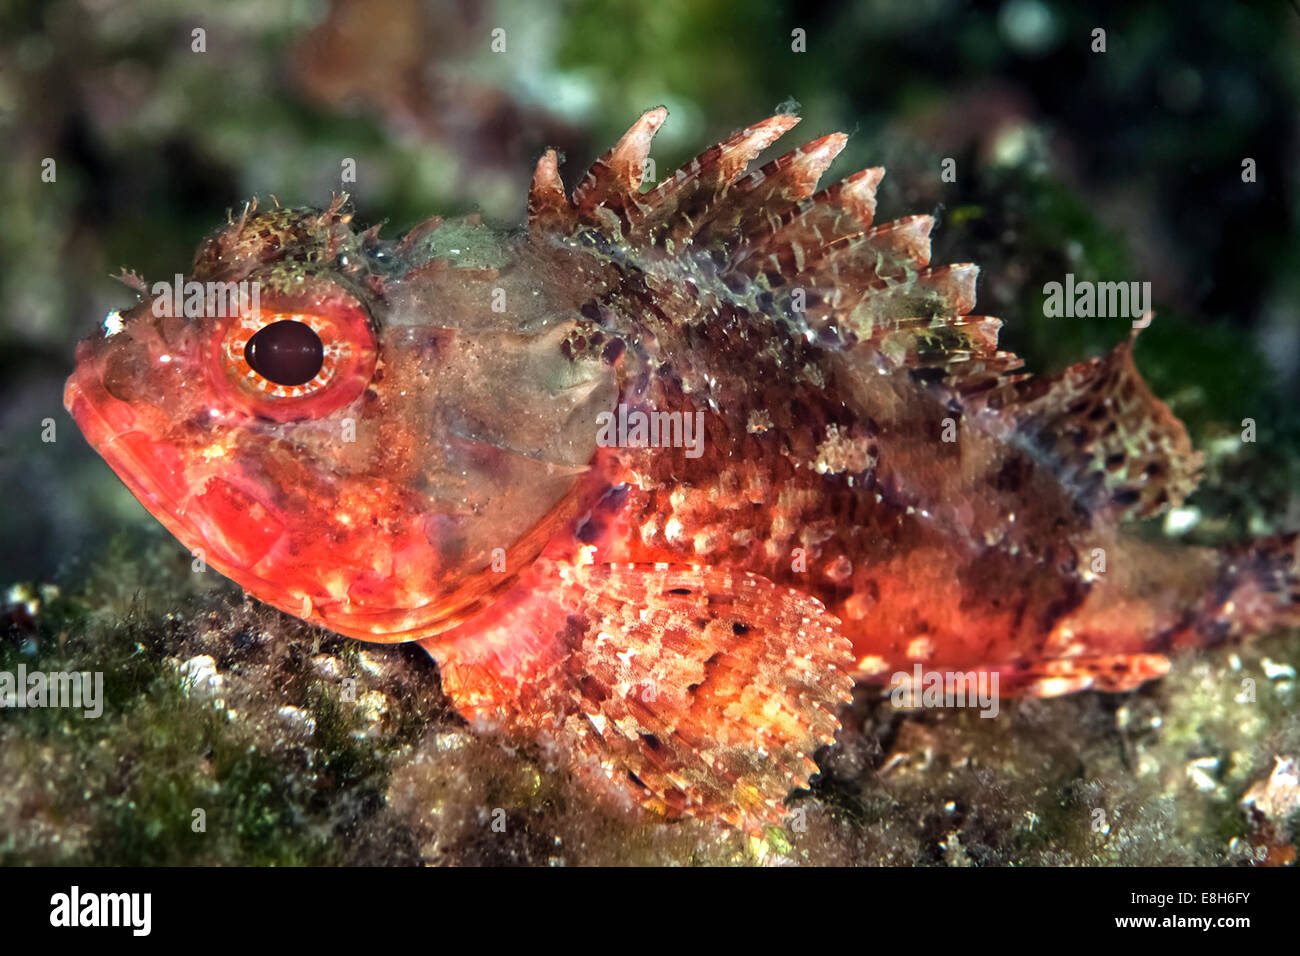 Croatia, Small red scorpionfish, Scorpaena notata Stock Photo